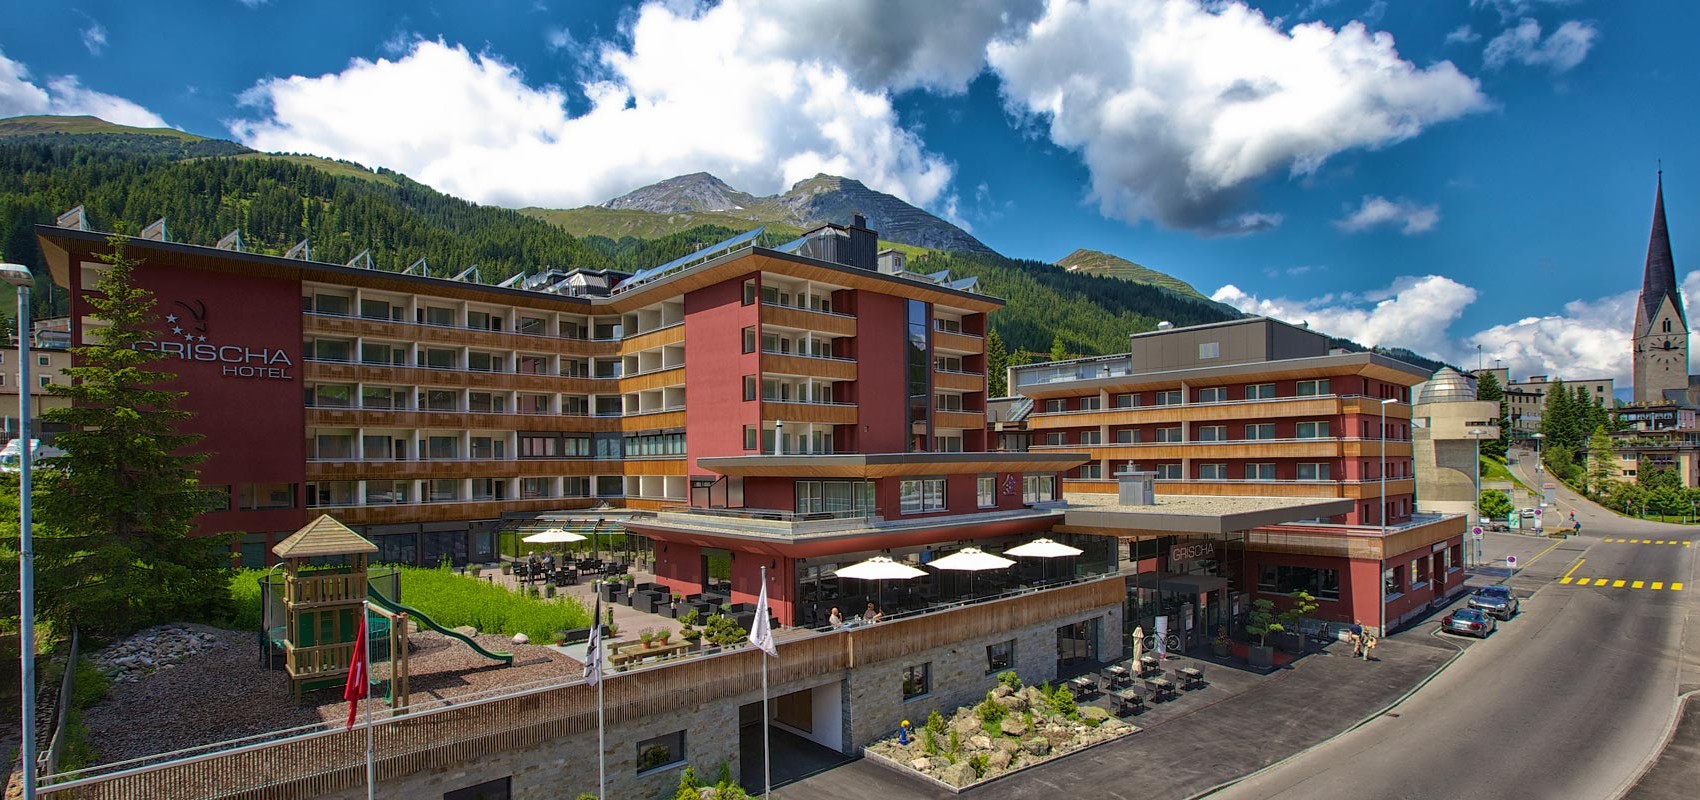 Hotel Grischa, vista esterna Panorama